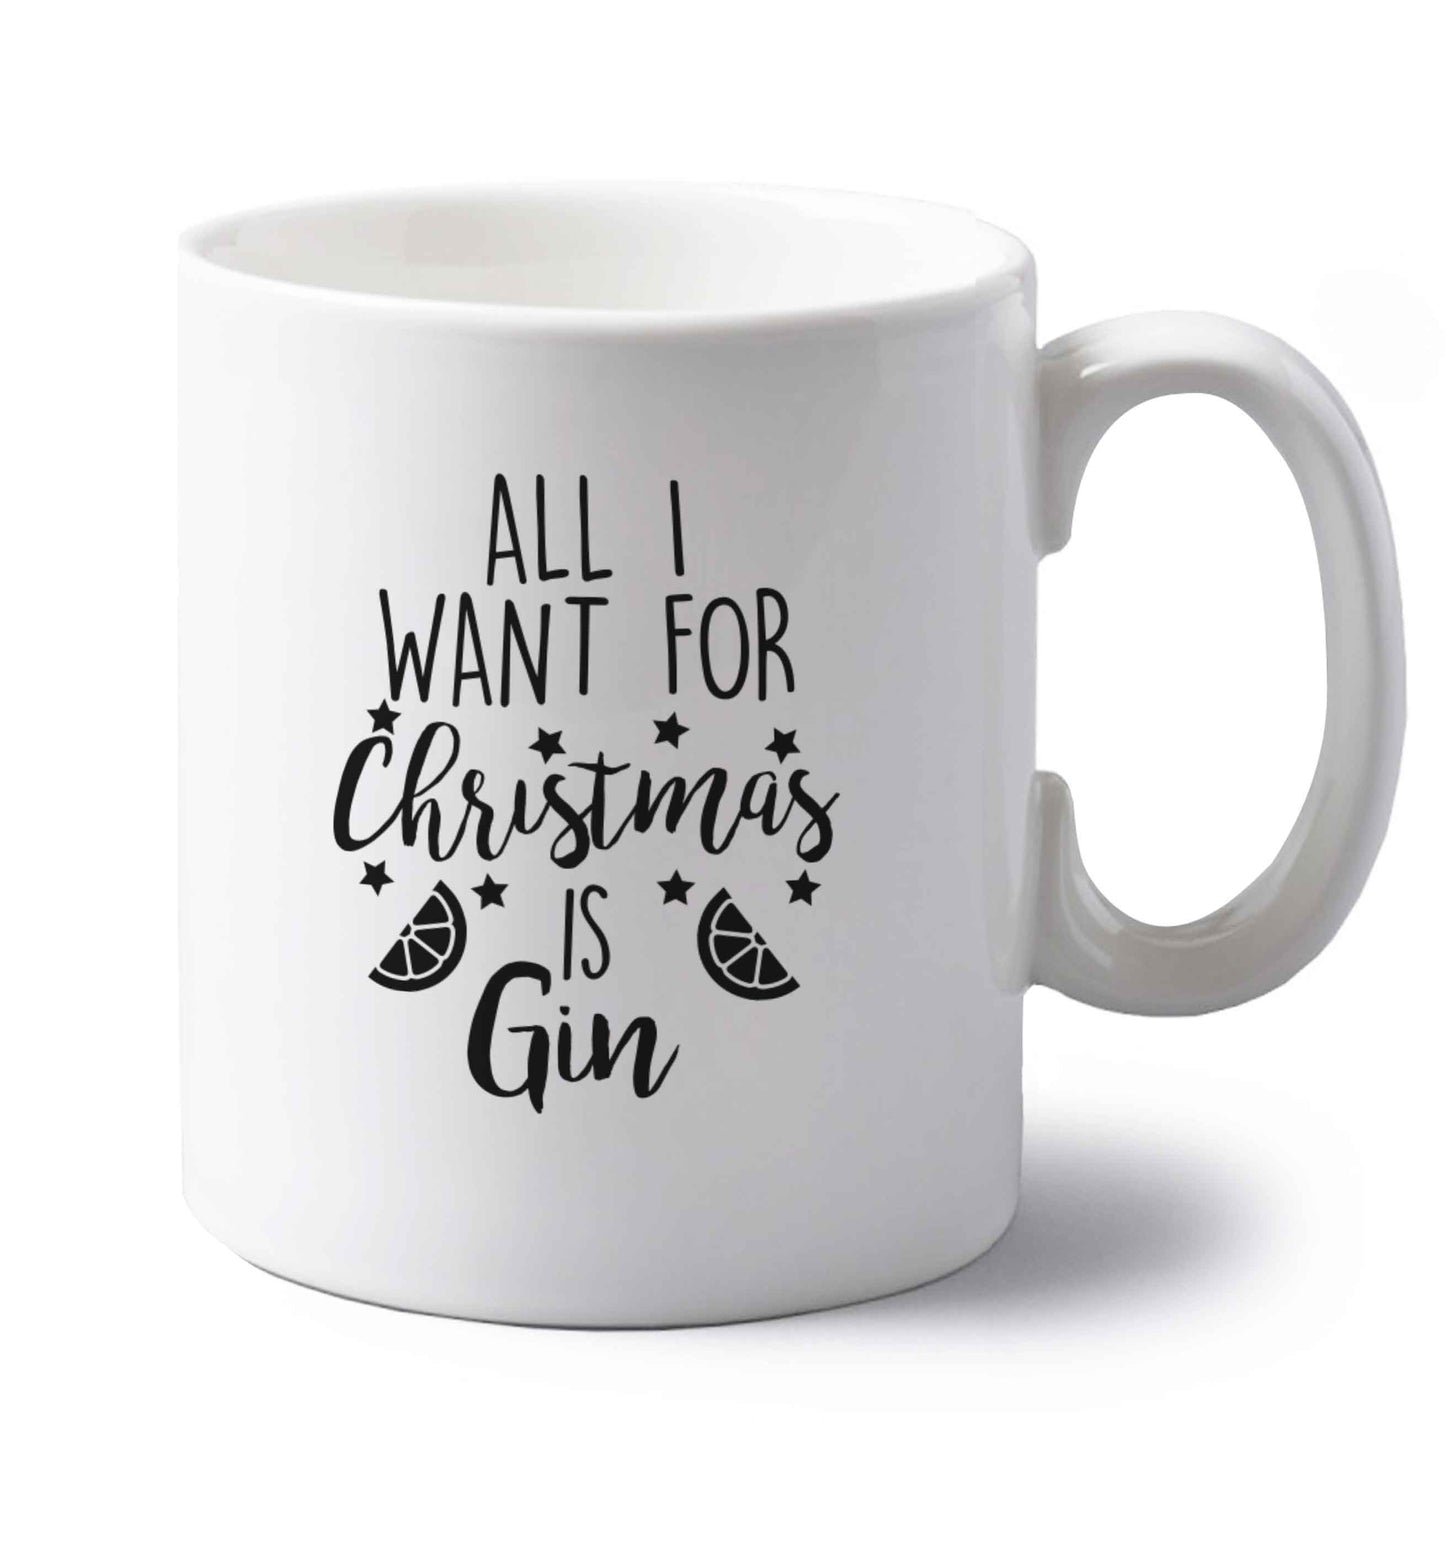 All I want for Christmas is gin left handed white ceramic mug 